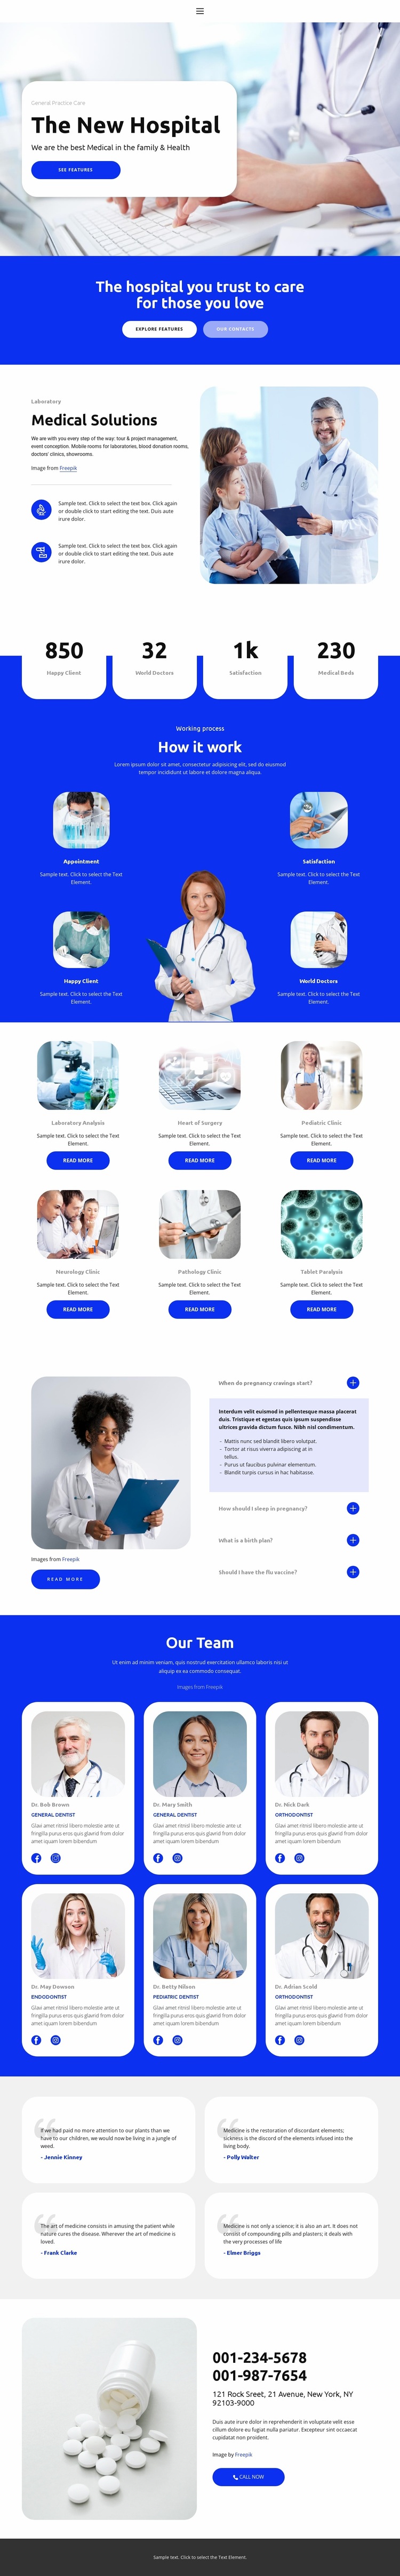 The New Hospital Website Design